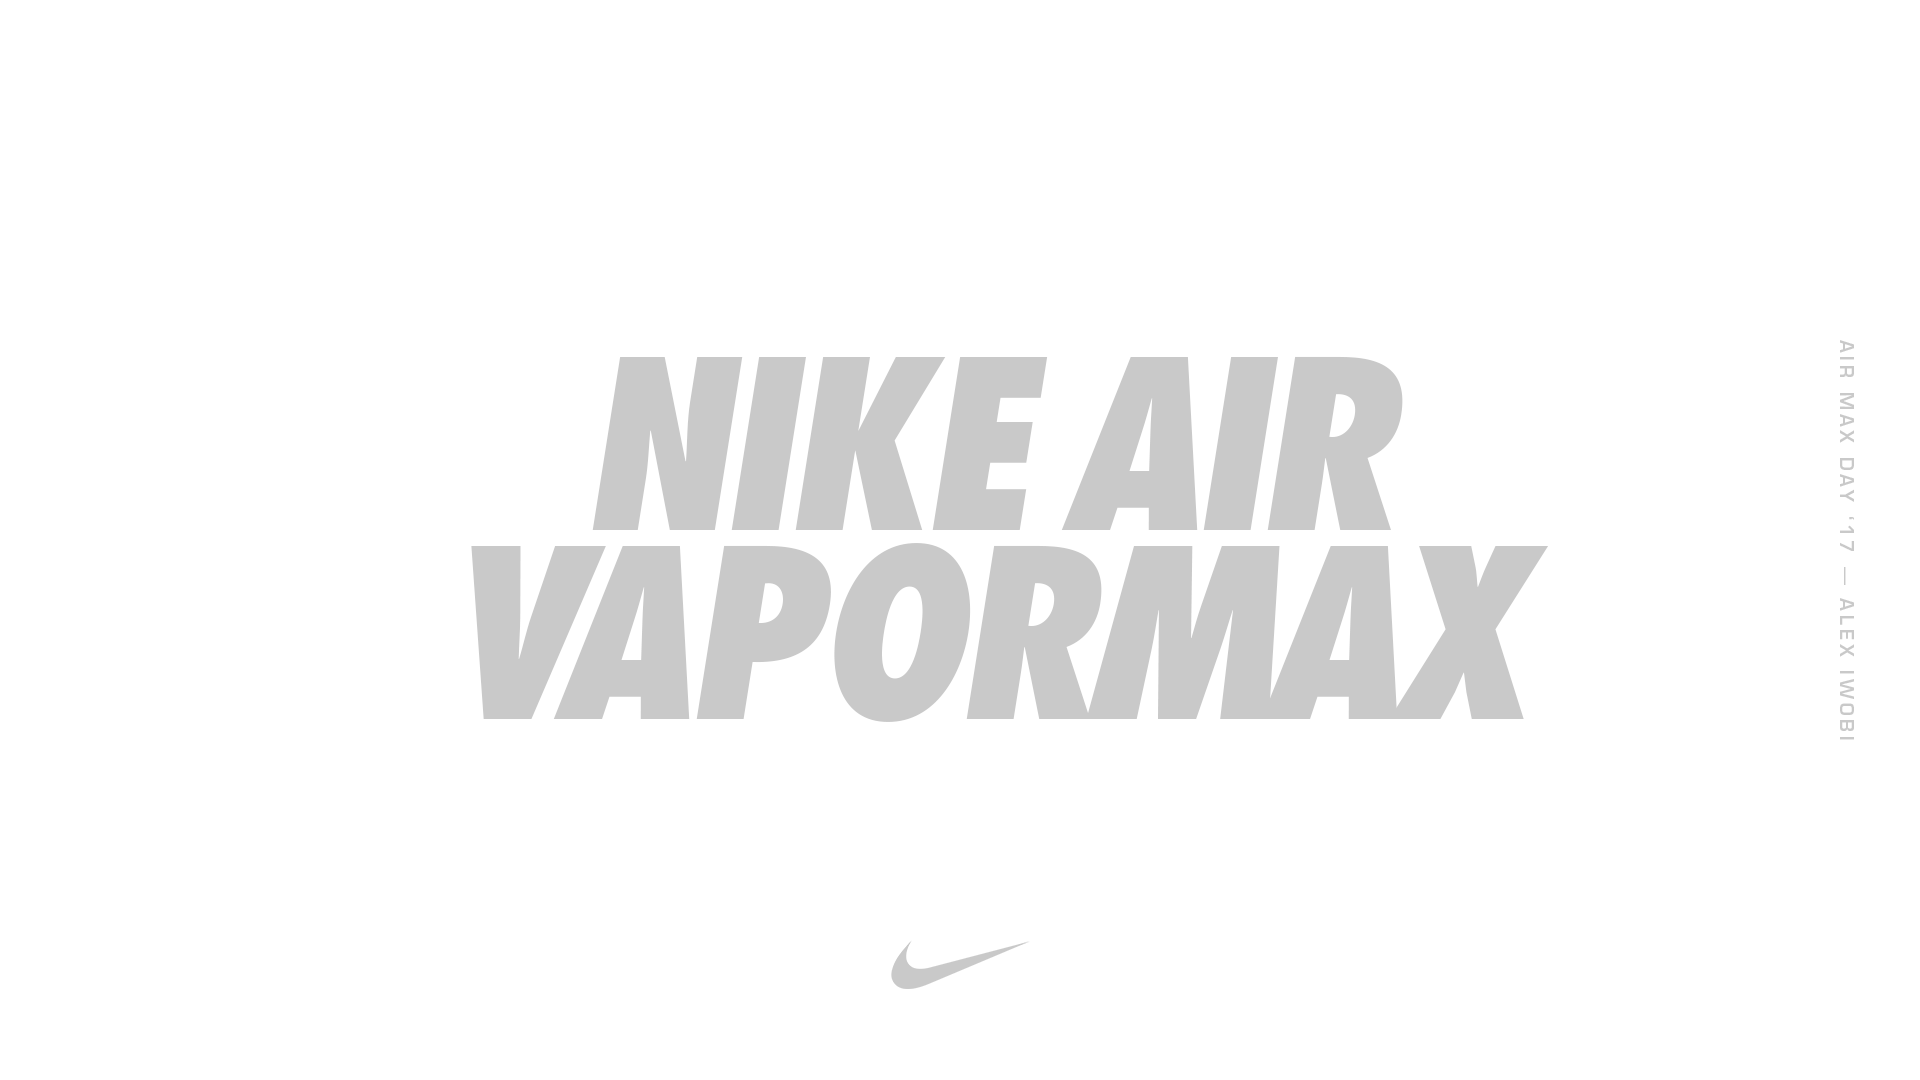 vapormax logo